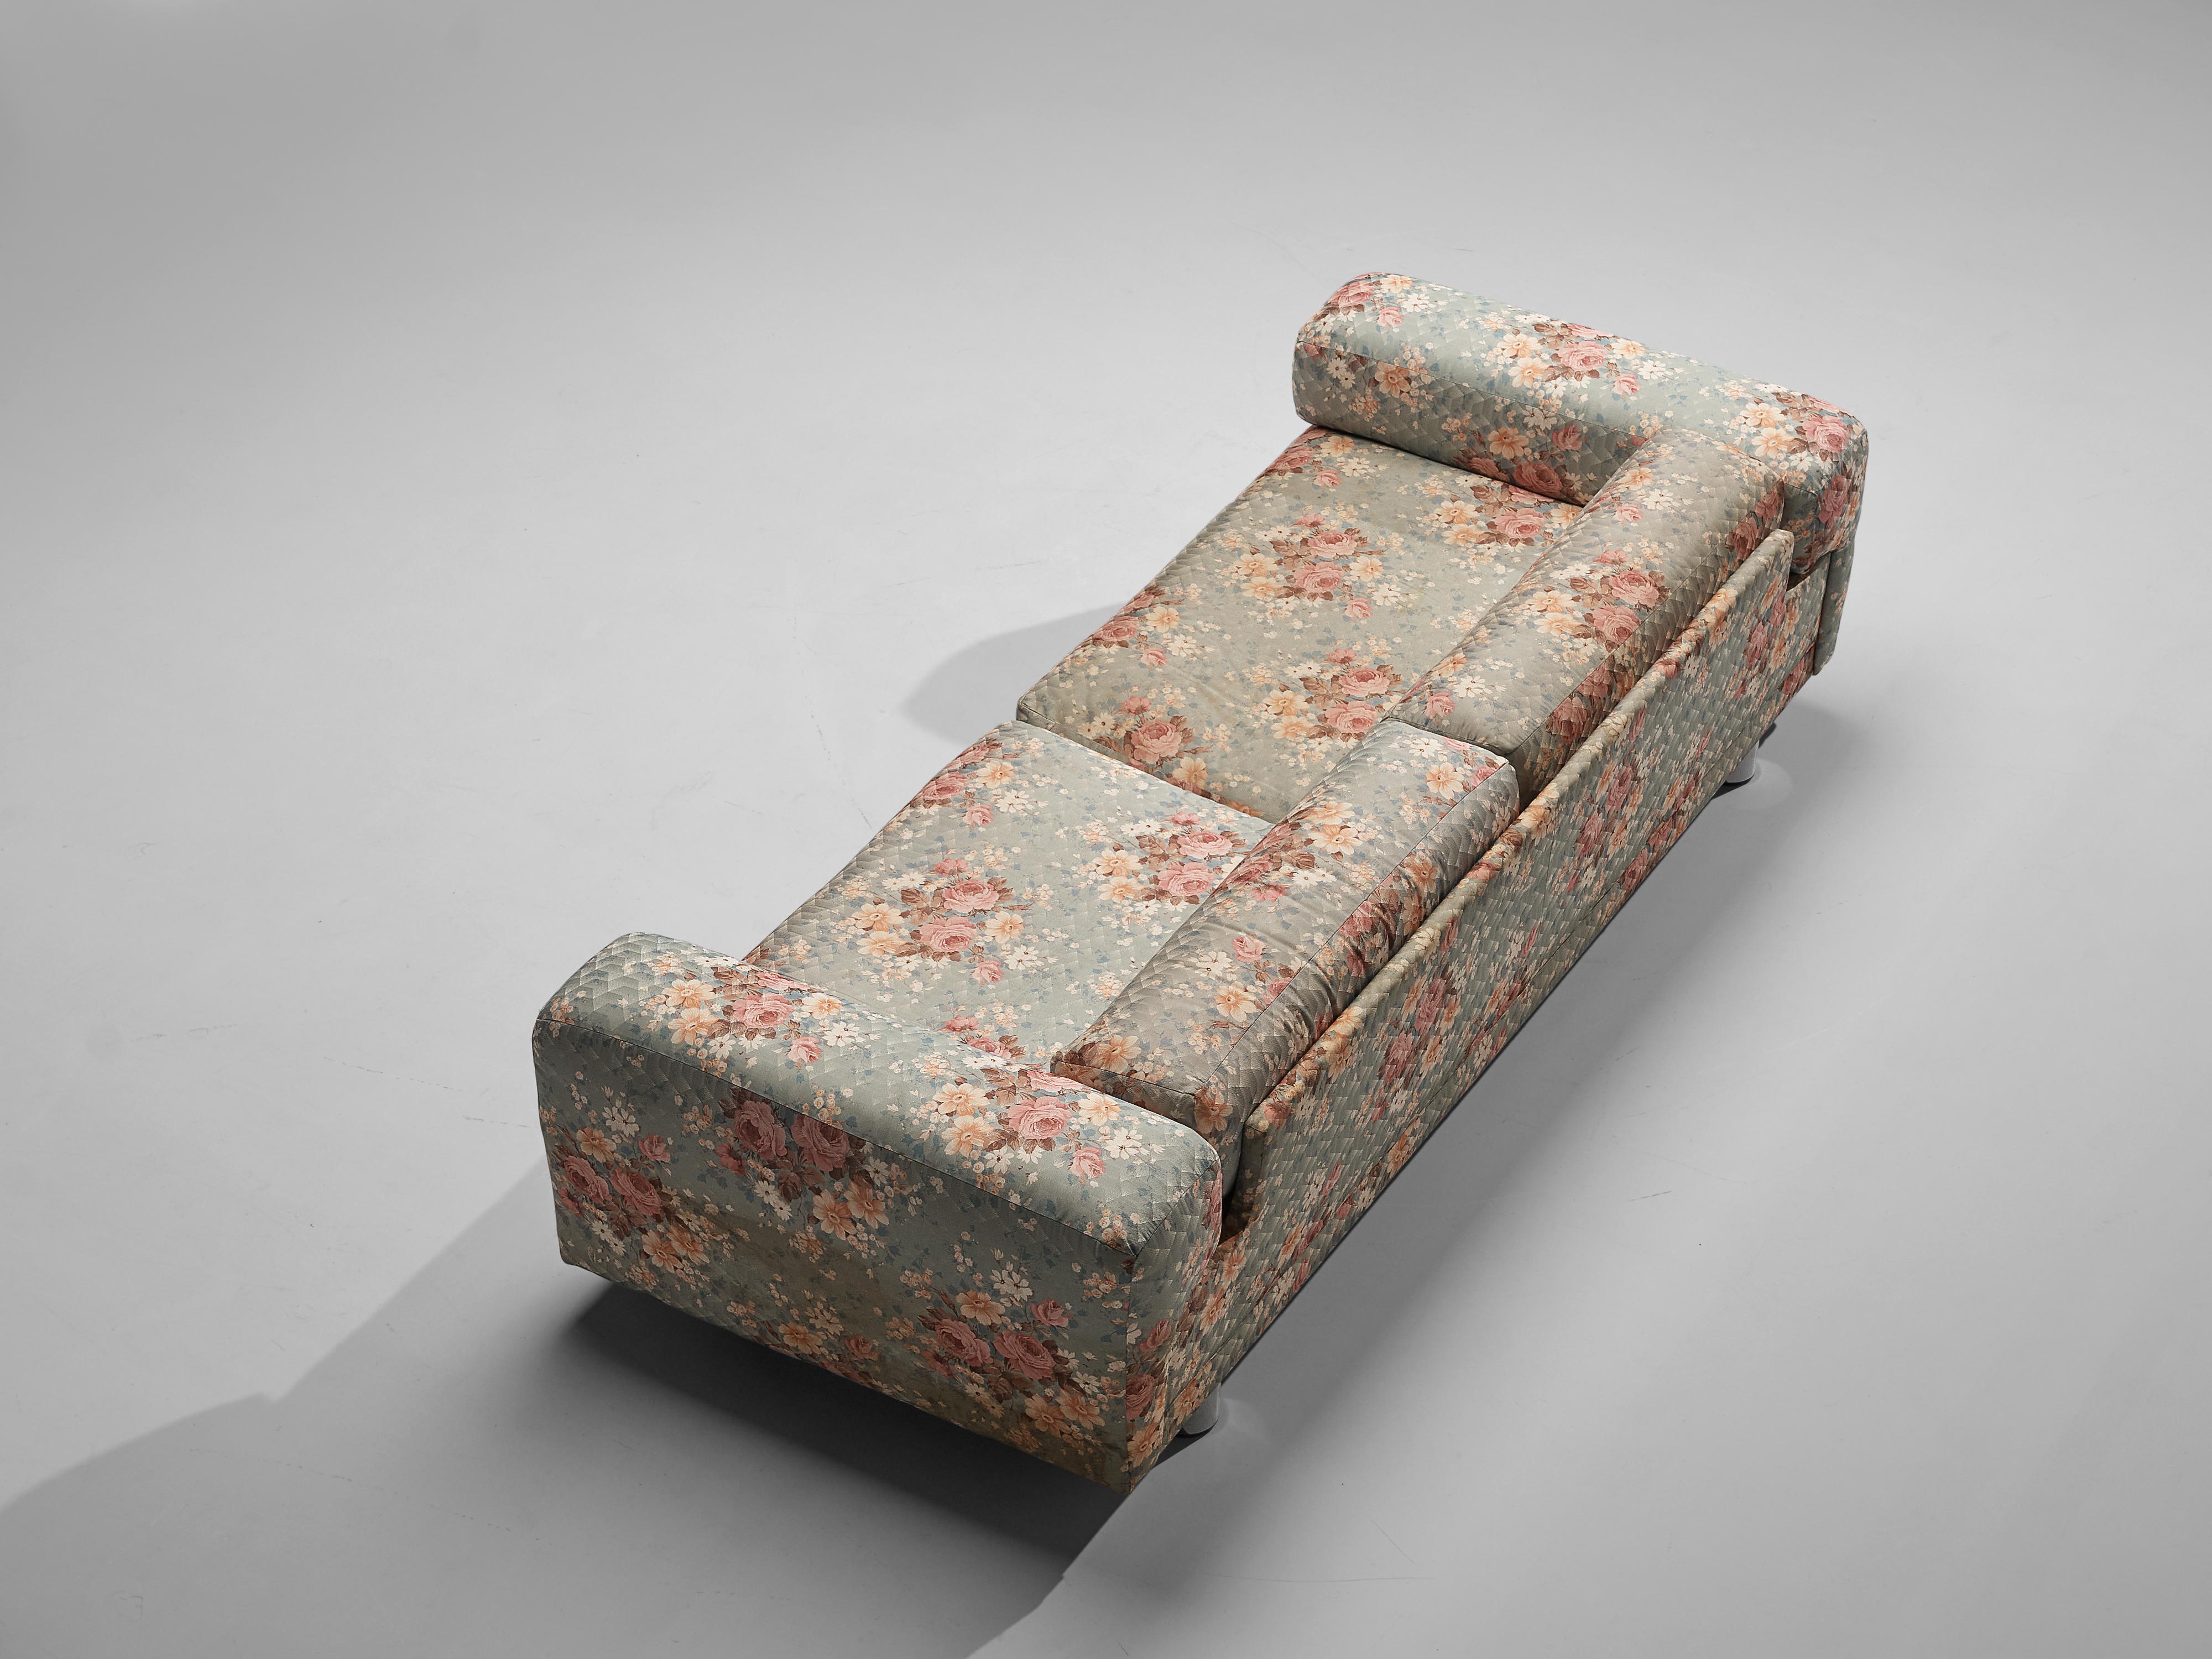 Metal Howard Keith Grand 'Diplomat' Sofa in Bright Floral Upholstery